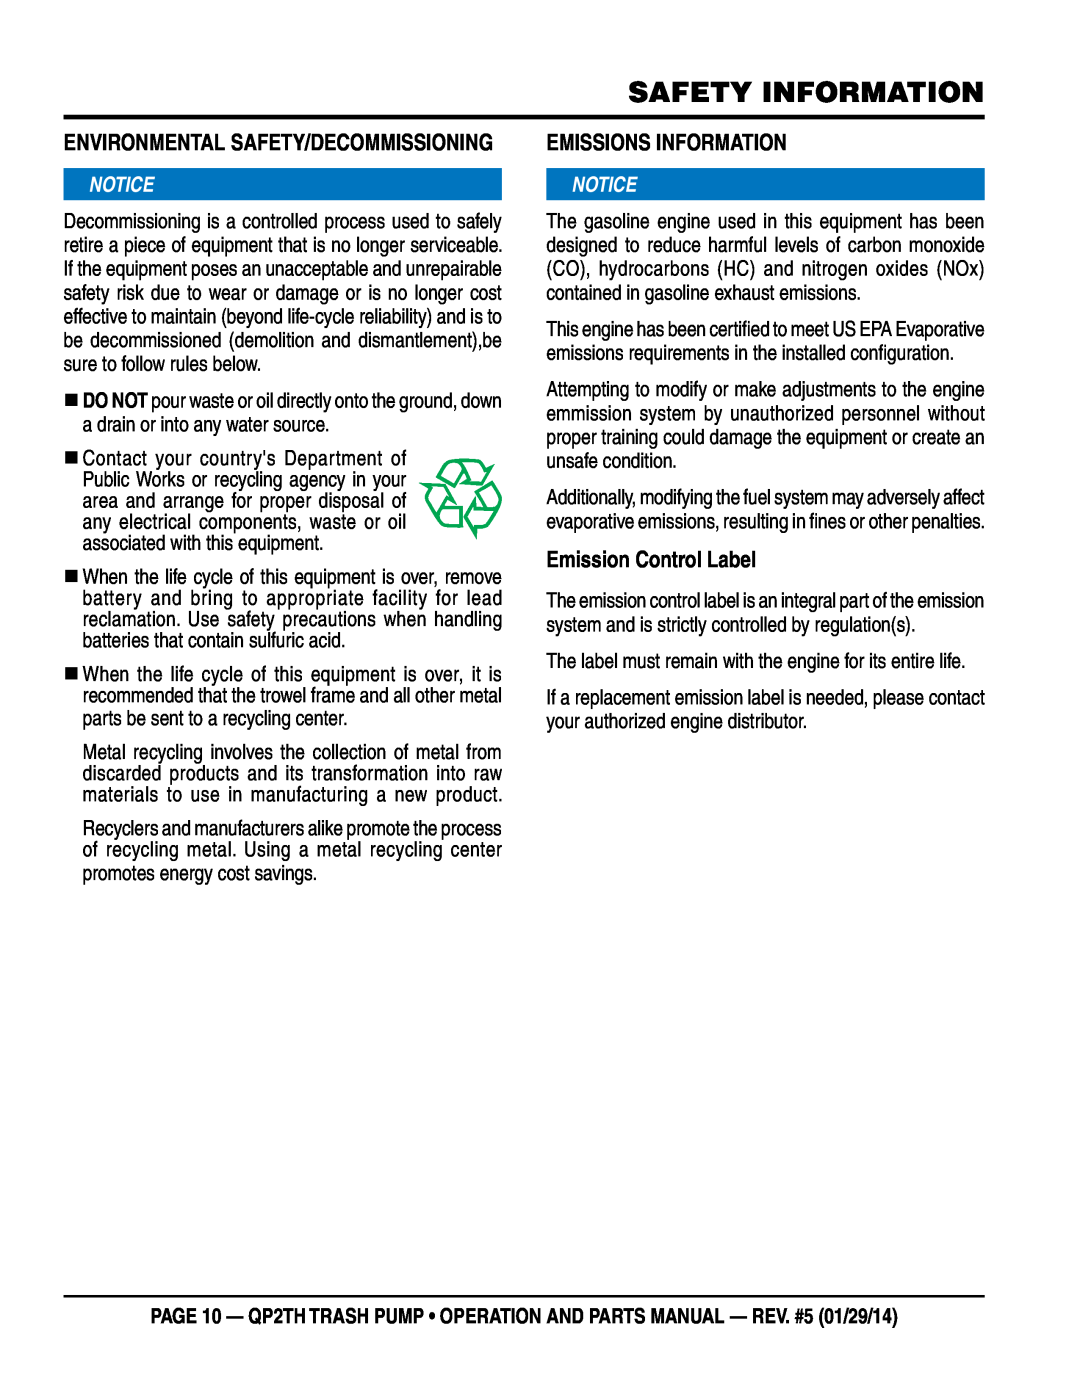 Multiquip QP2TH manual Emissions Information, Emission Control Label, Safety Information 